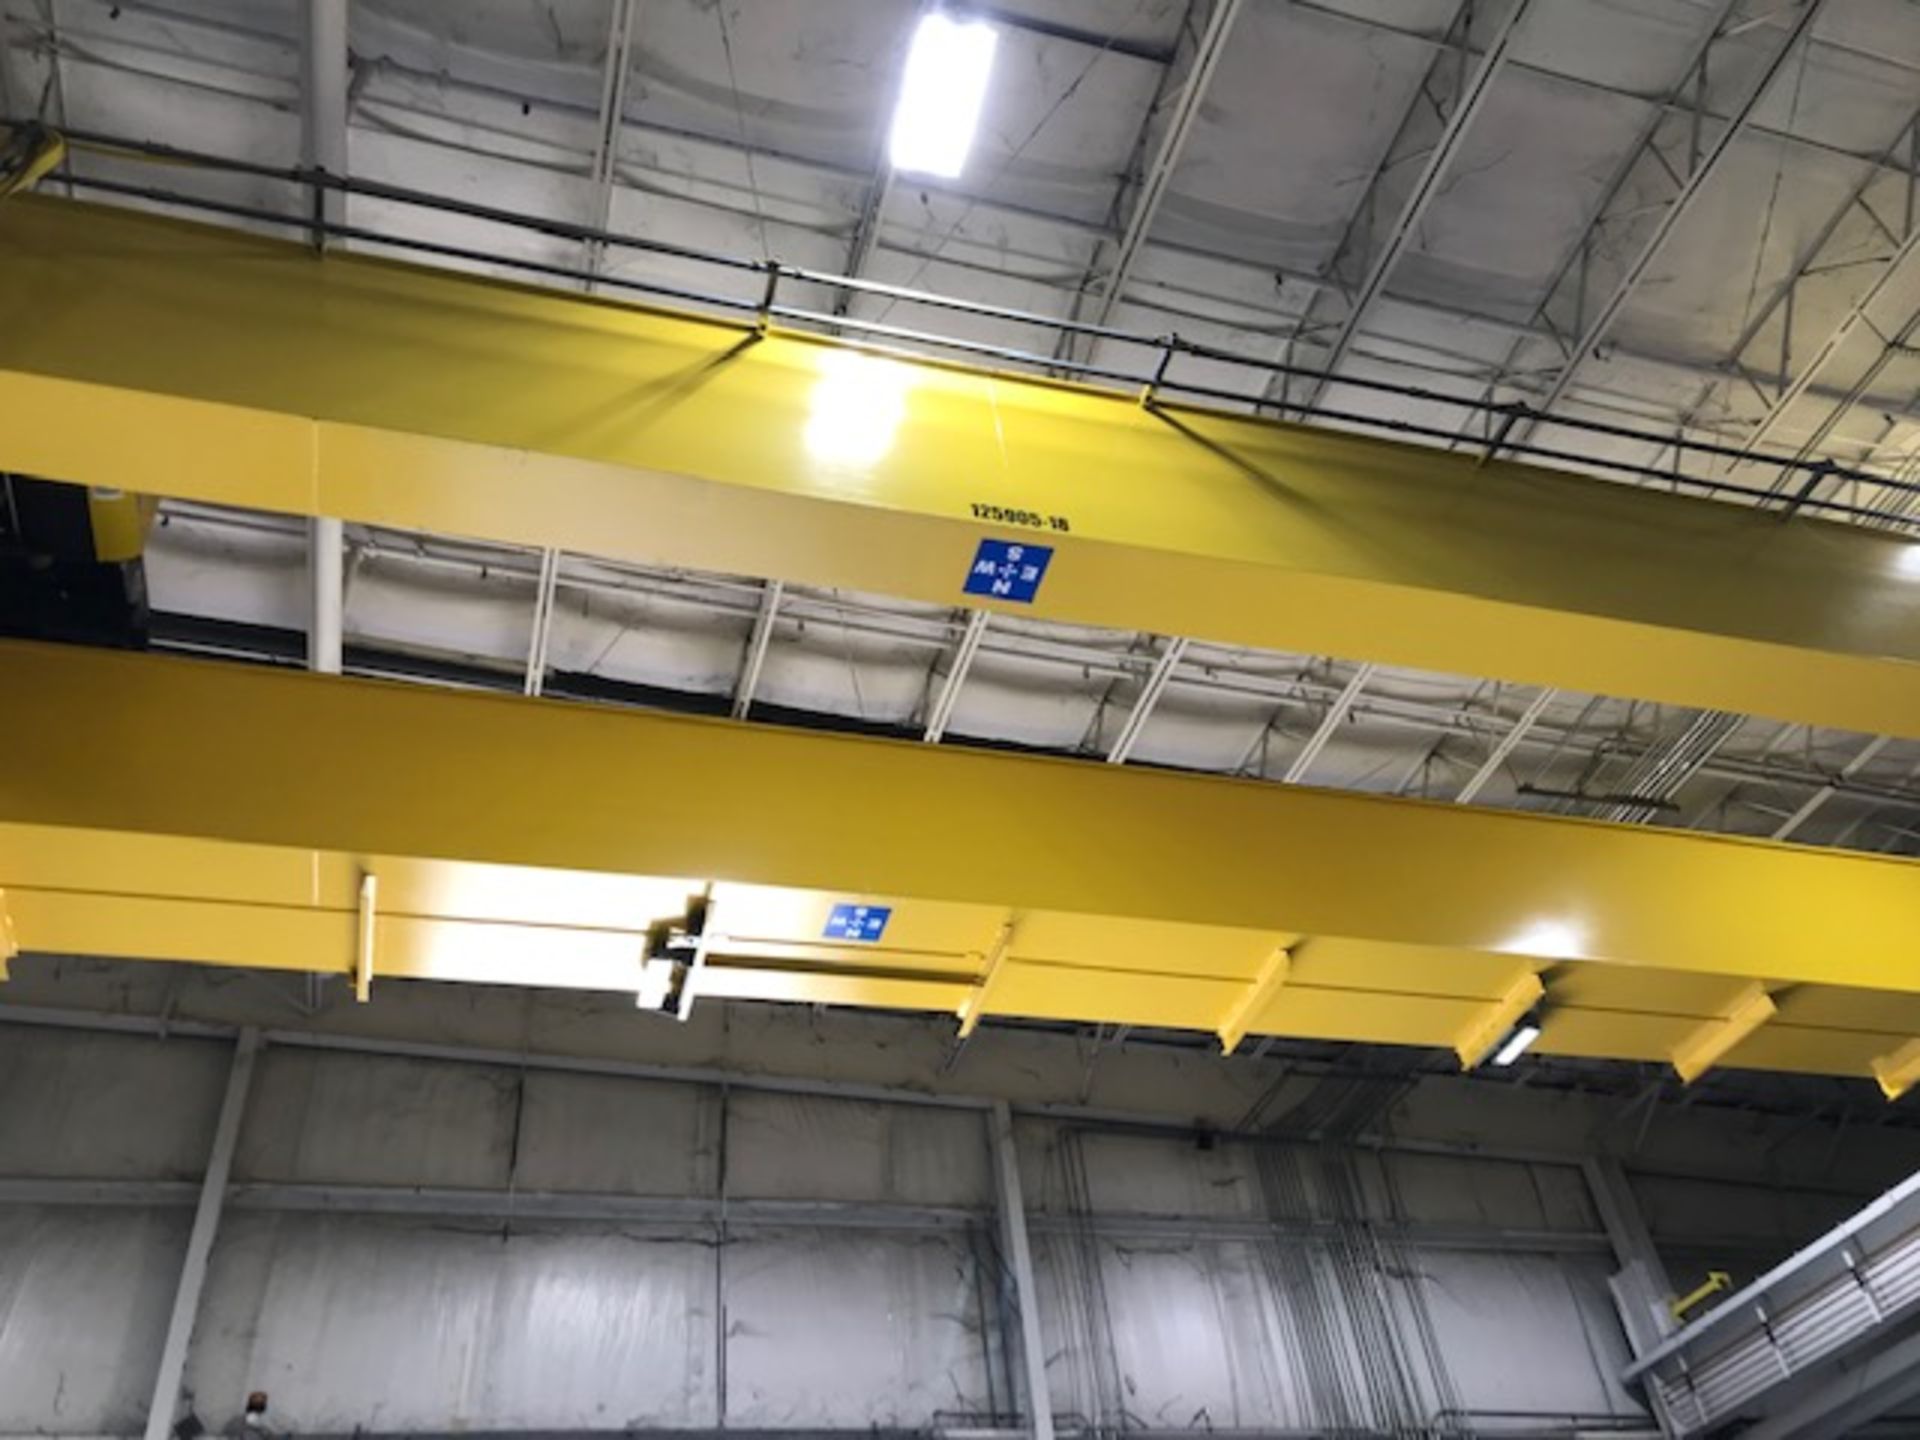 New 2018 Southeast Crane & Hoist Double Box Girder Overhead Bridge Crane: 50 Ton Capacity Main Hoist - Image 2 of 5